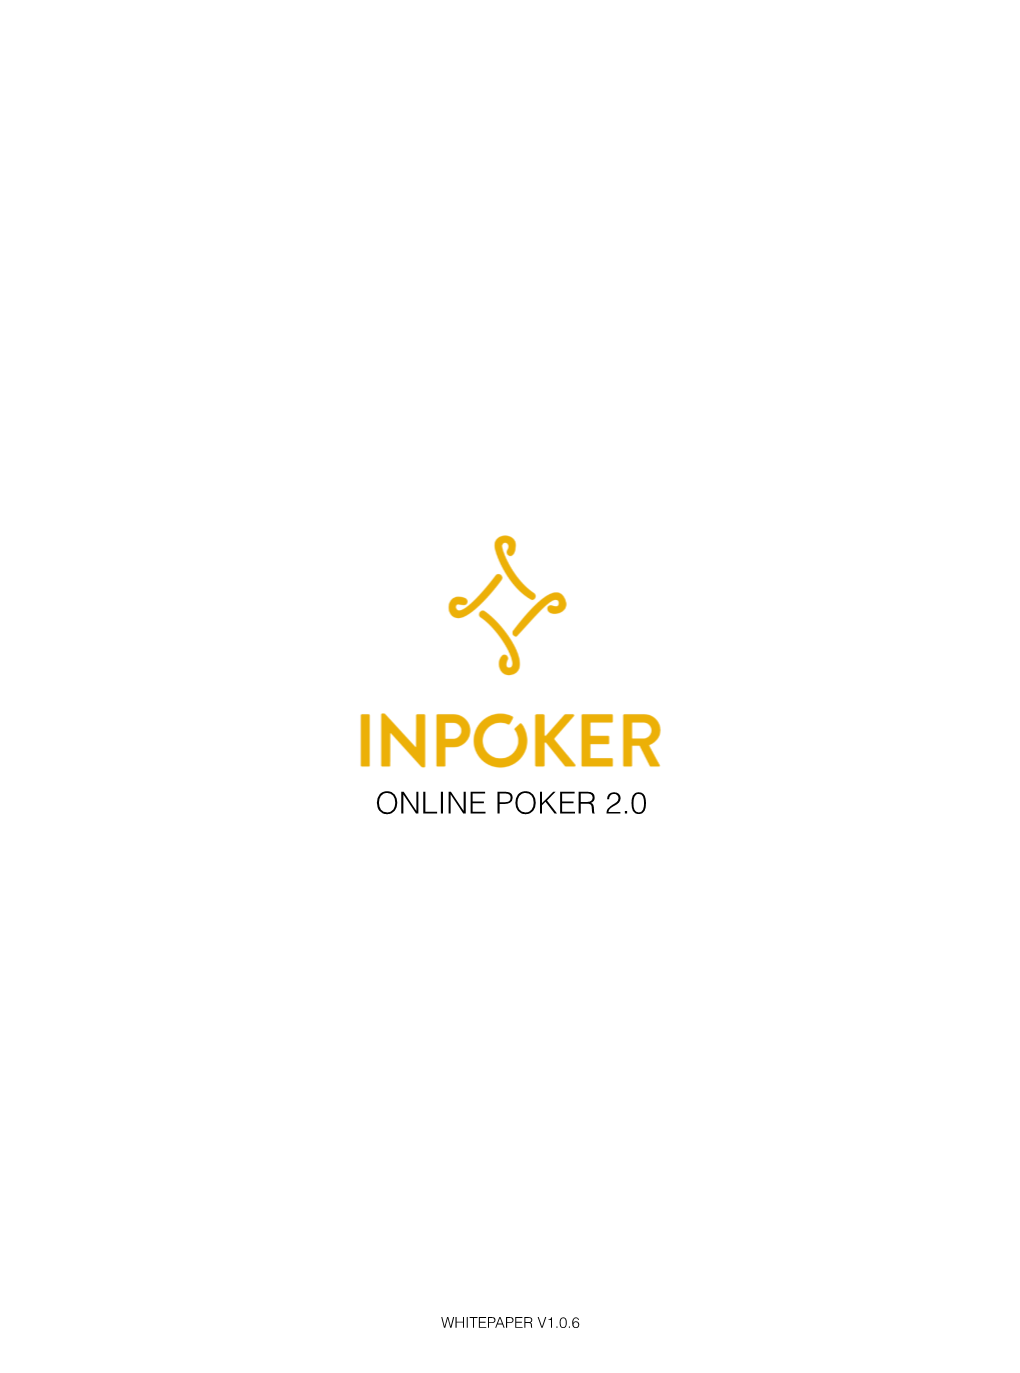 Online Poker 2.0